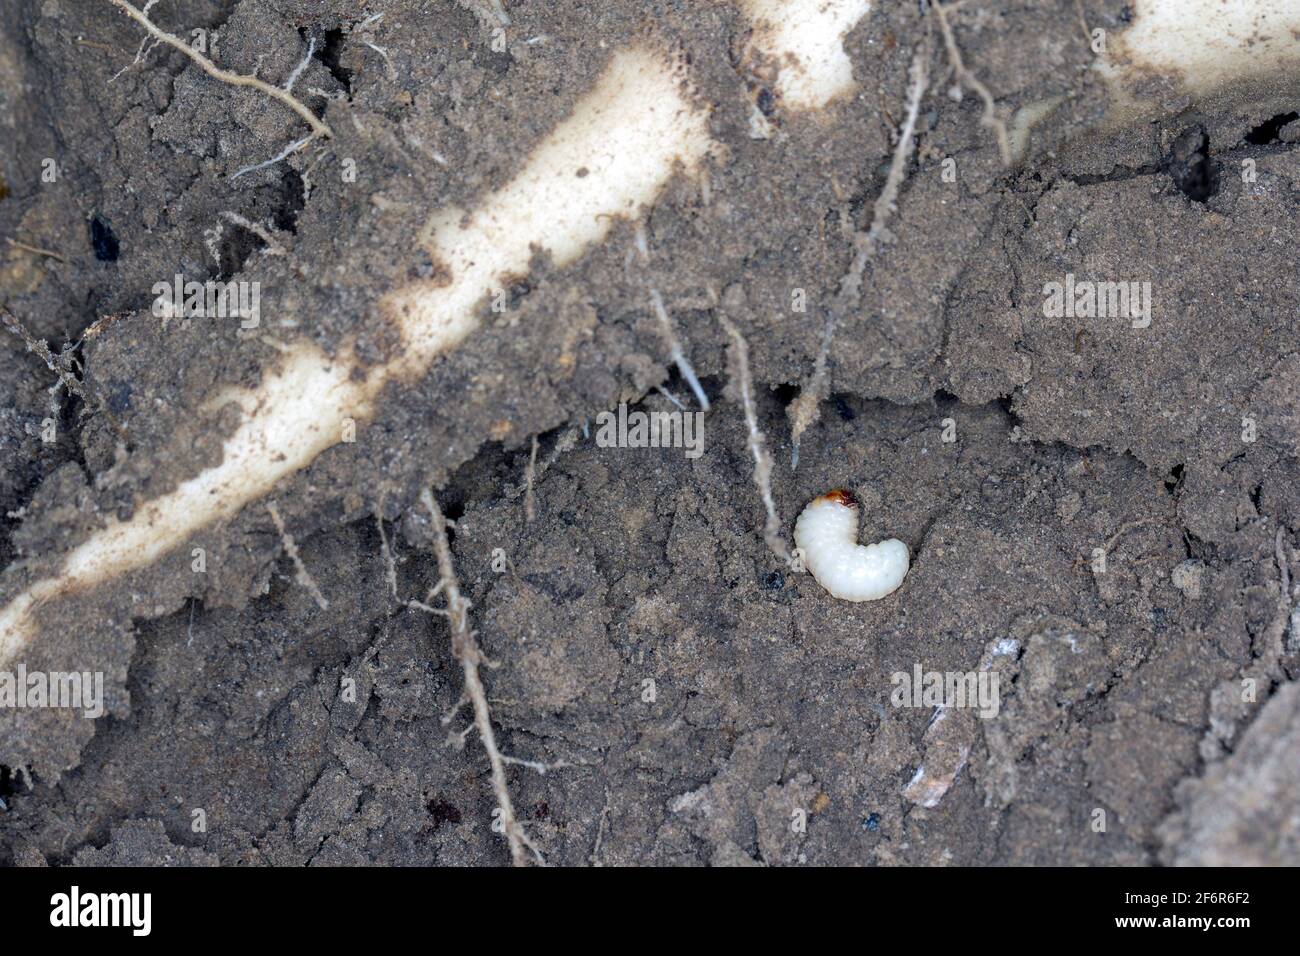 Larva of Sugarbeet weevil (Asproparthenis punctiventris formerly Bothynoderes punctiventris) on leaves damaged beetroot plants. Stock Photo